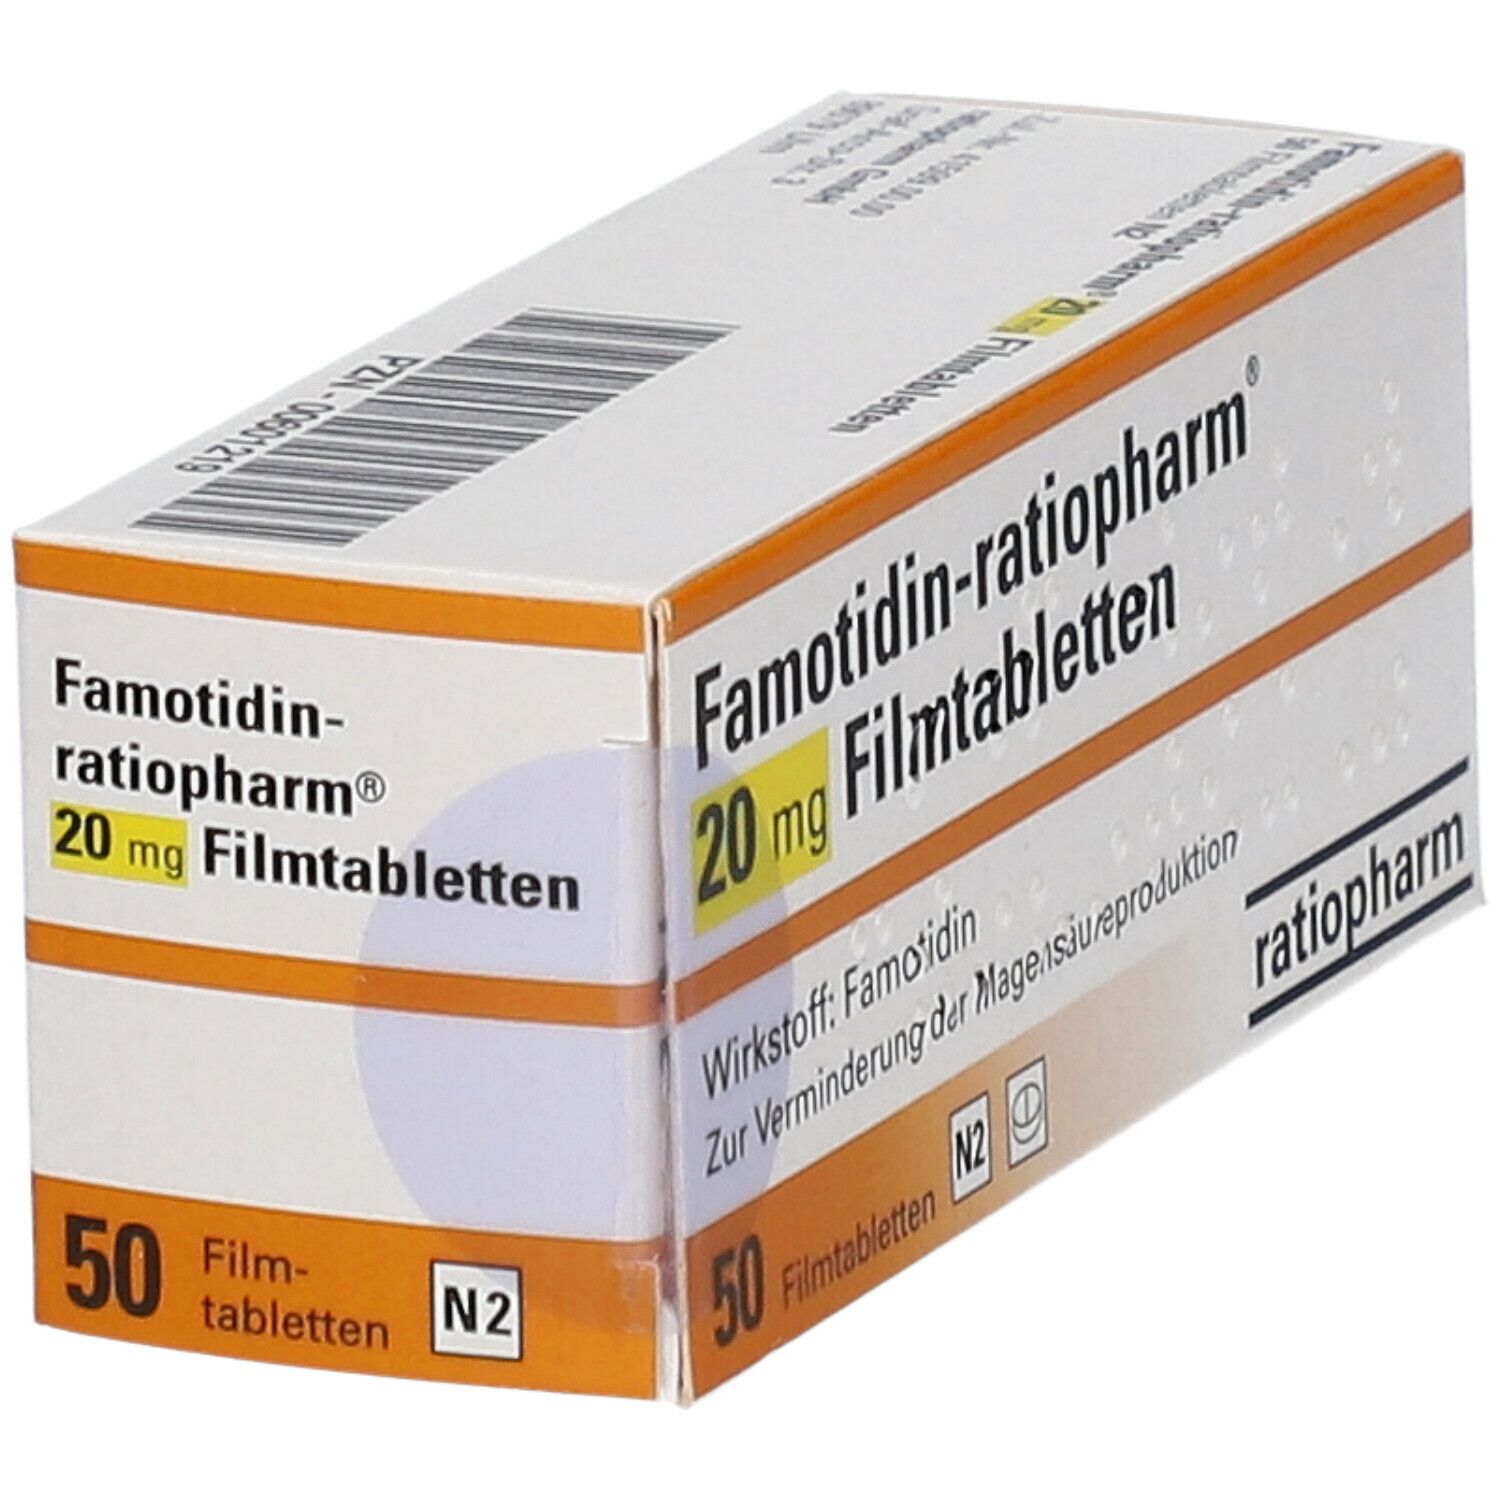 Famotidin-ratiopharm® 20 mg